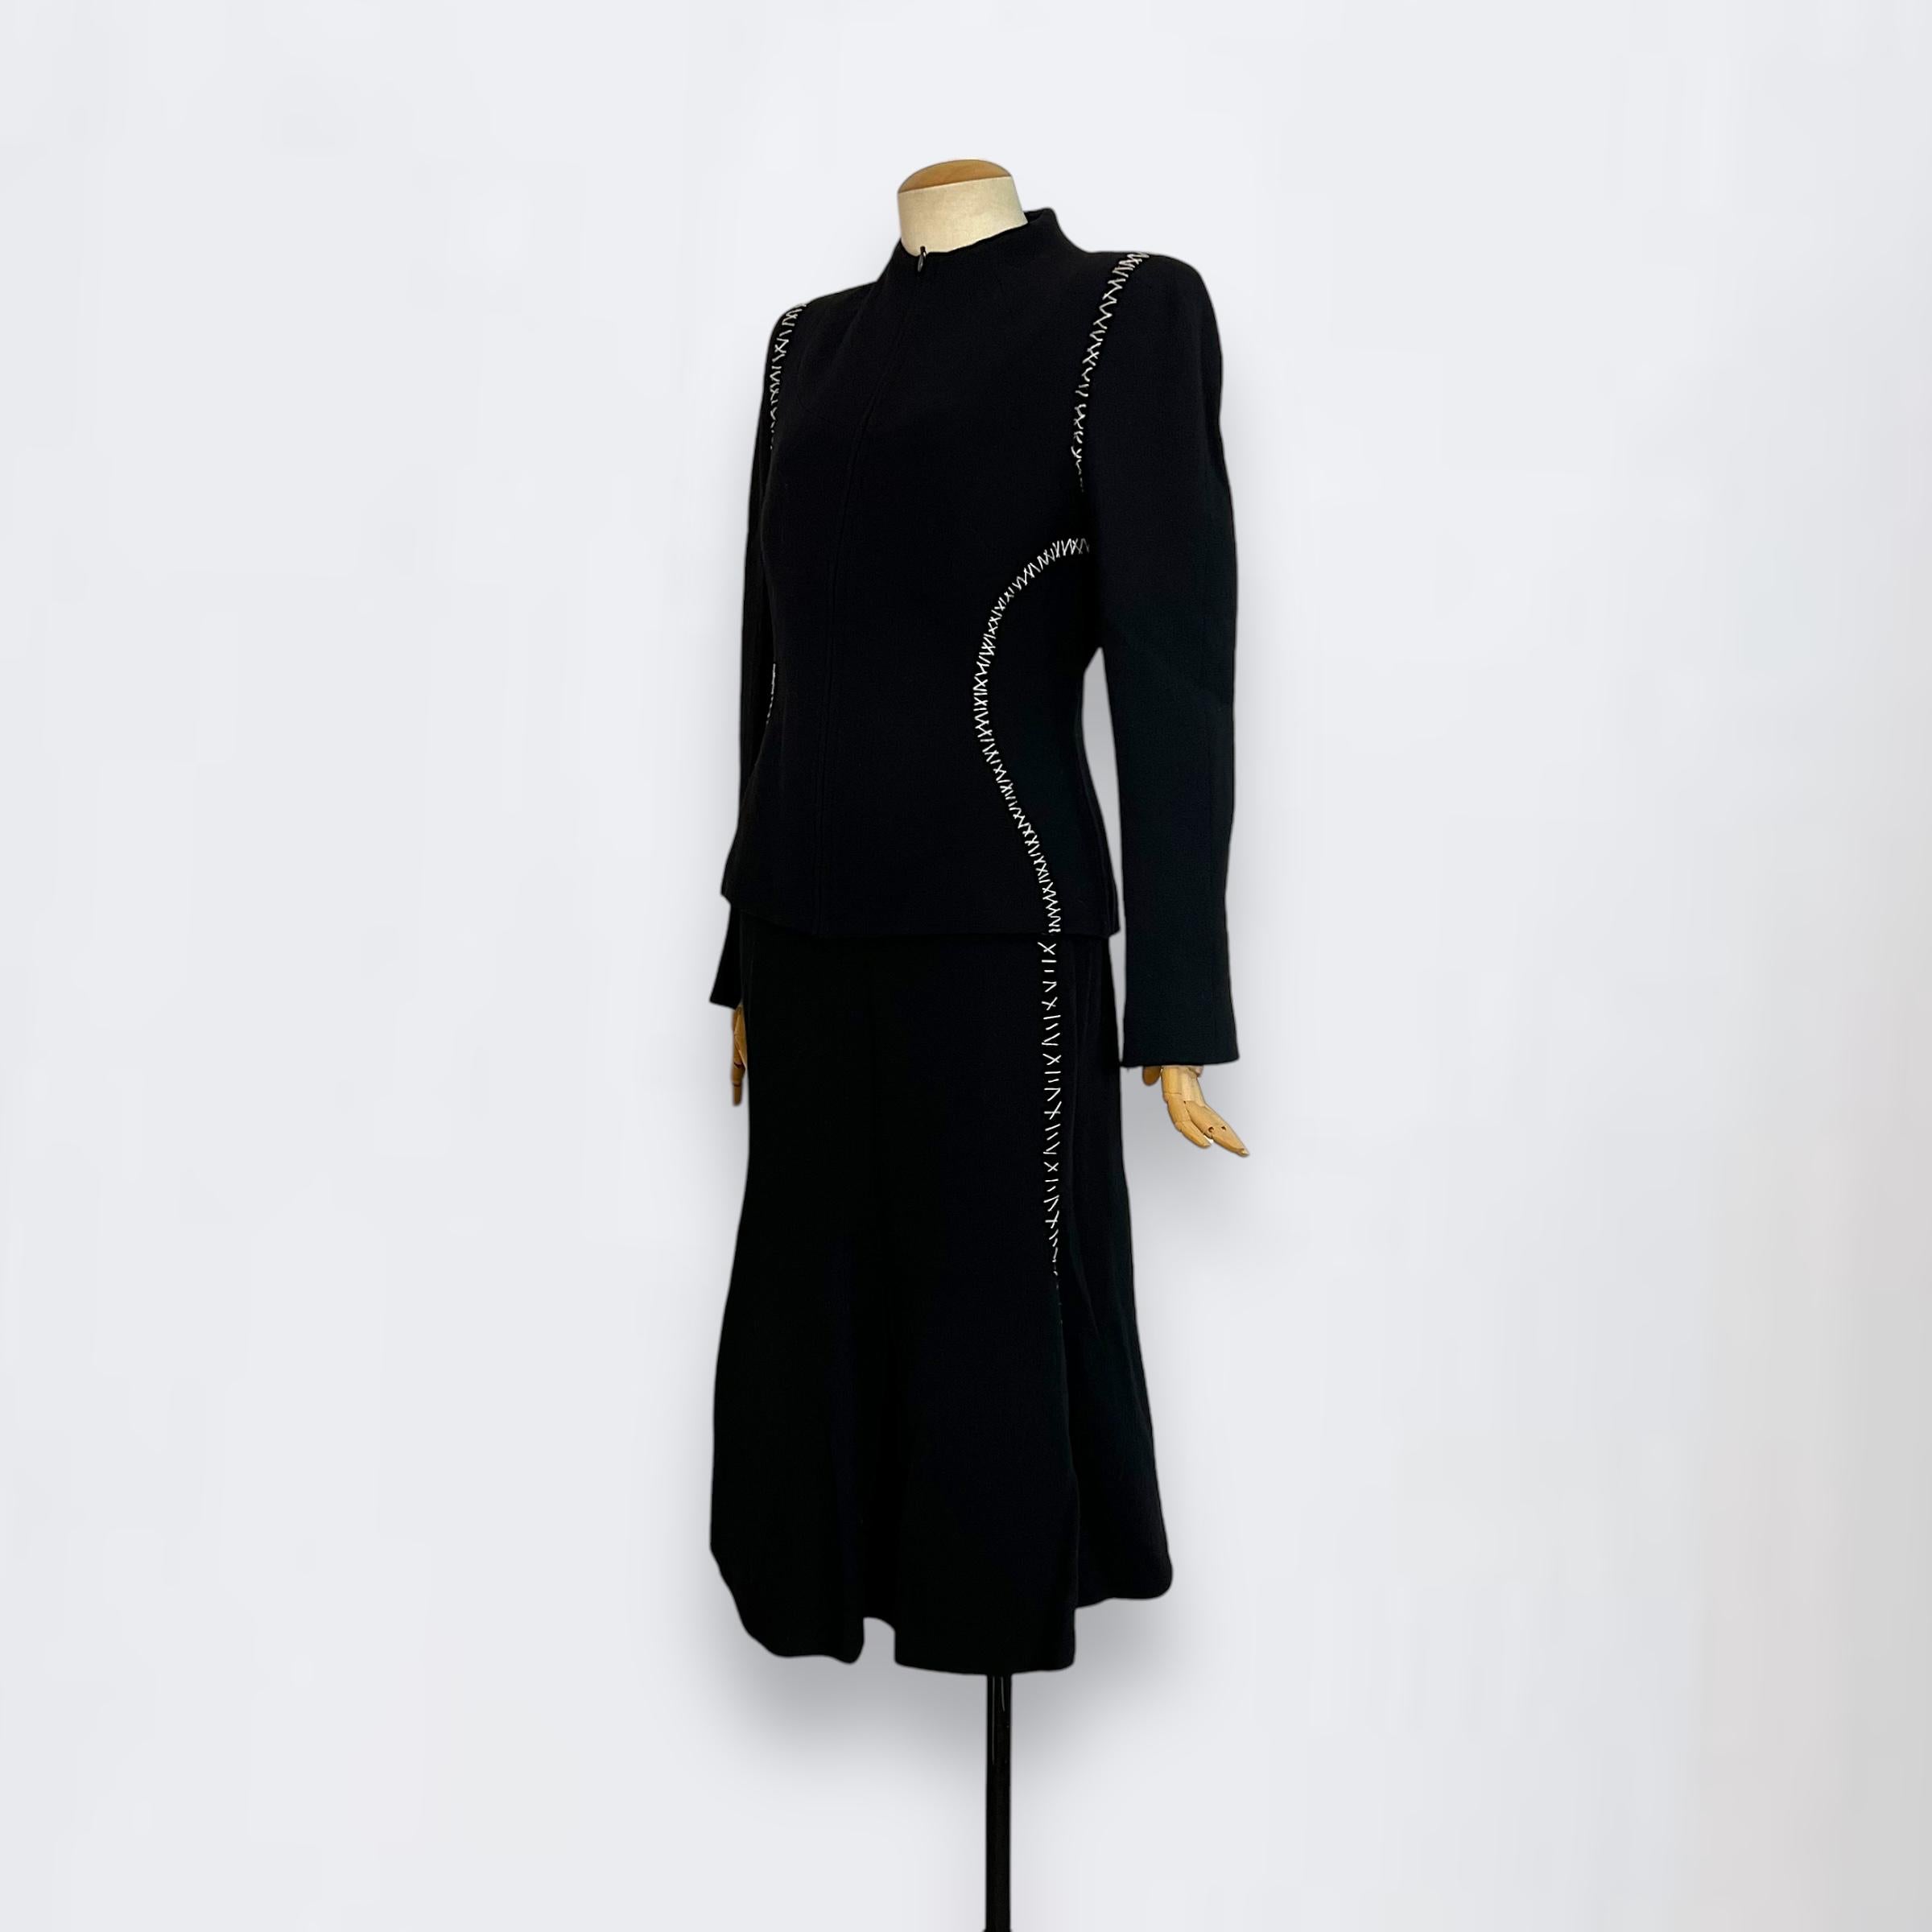 Alexander Mcqueen 2004 black tailor stitches suit For Sale 3